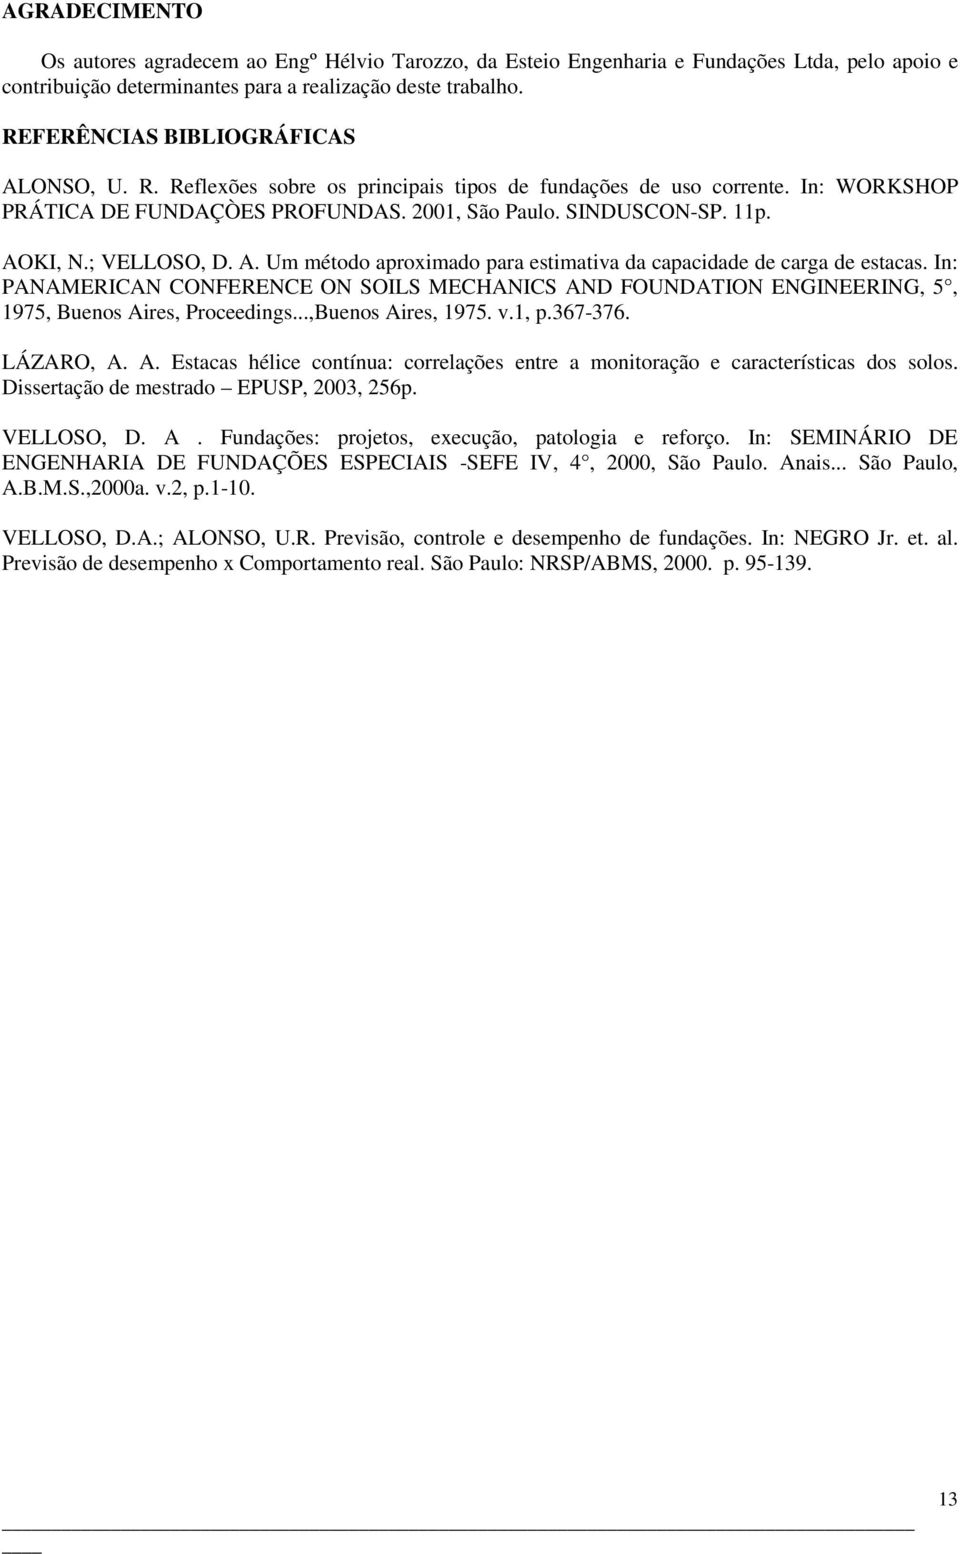 ; VELLOSO, D. A. Um método aproximado para estimativa da capacidade de carga de estacas. In: PANAMERICAN CONFERENCE ON SOILS MECHANICS AND FOUNDATION ENGINEERING, 5, 1975, Buenos Aires, Proceedings.